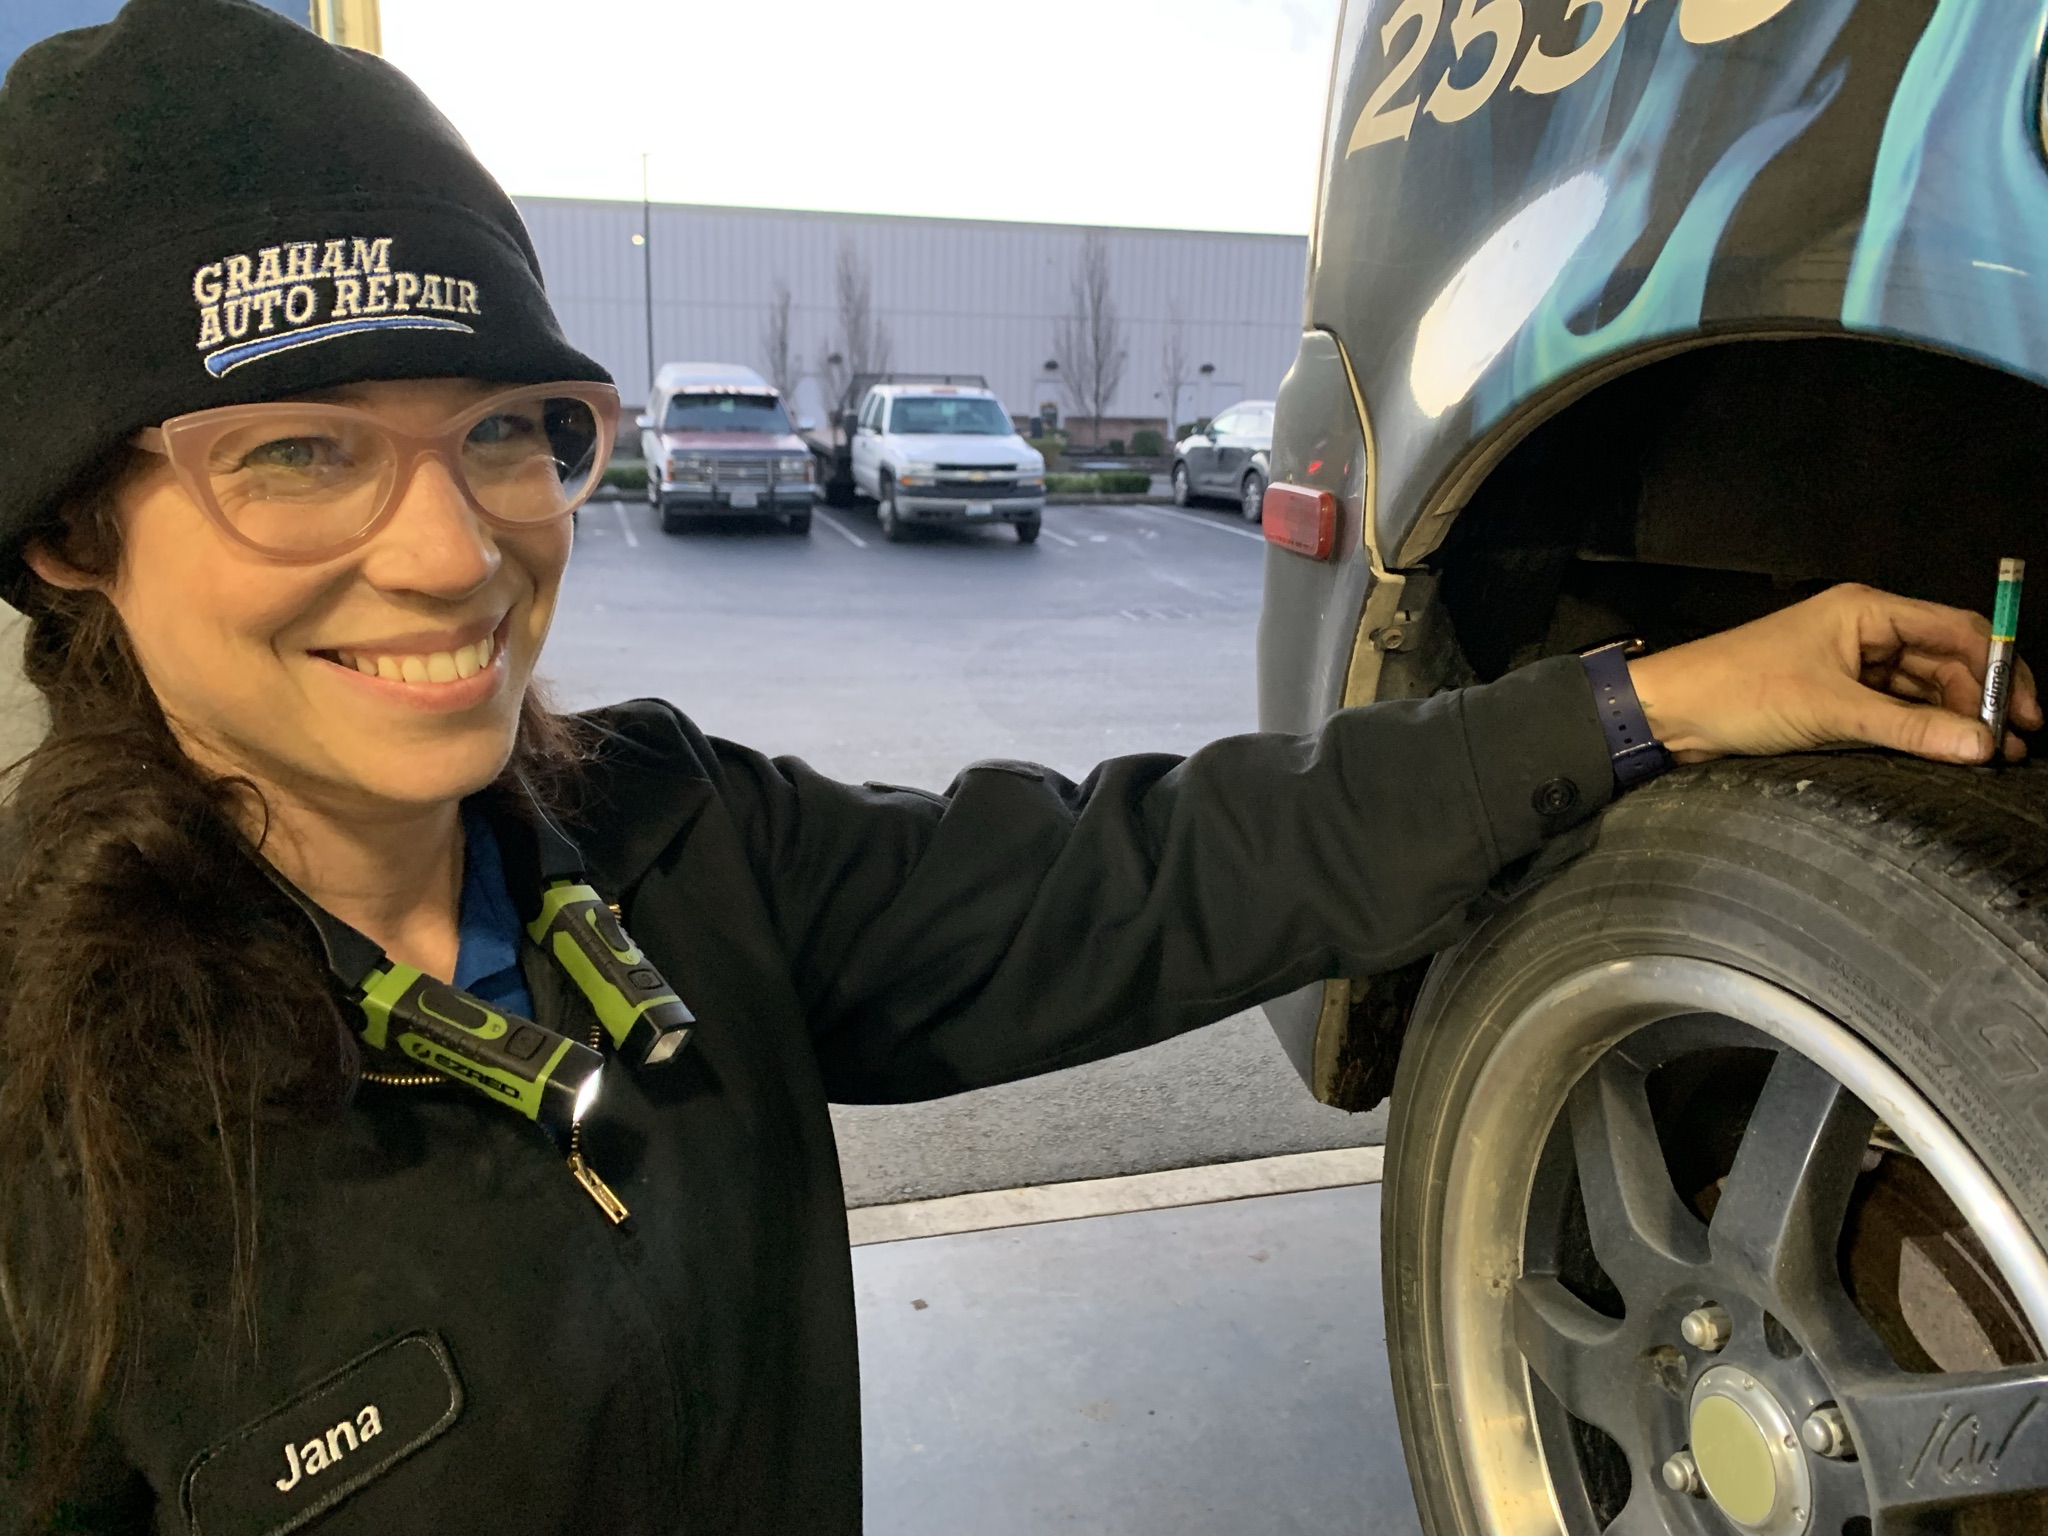 Graham Auto Repair Technician Jana Checking Tire Tread Depth